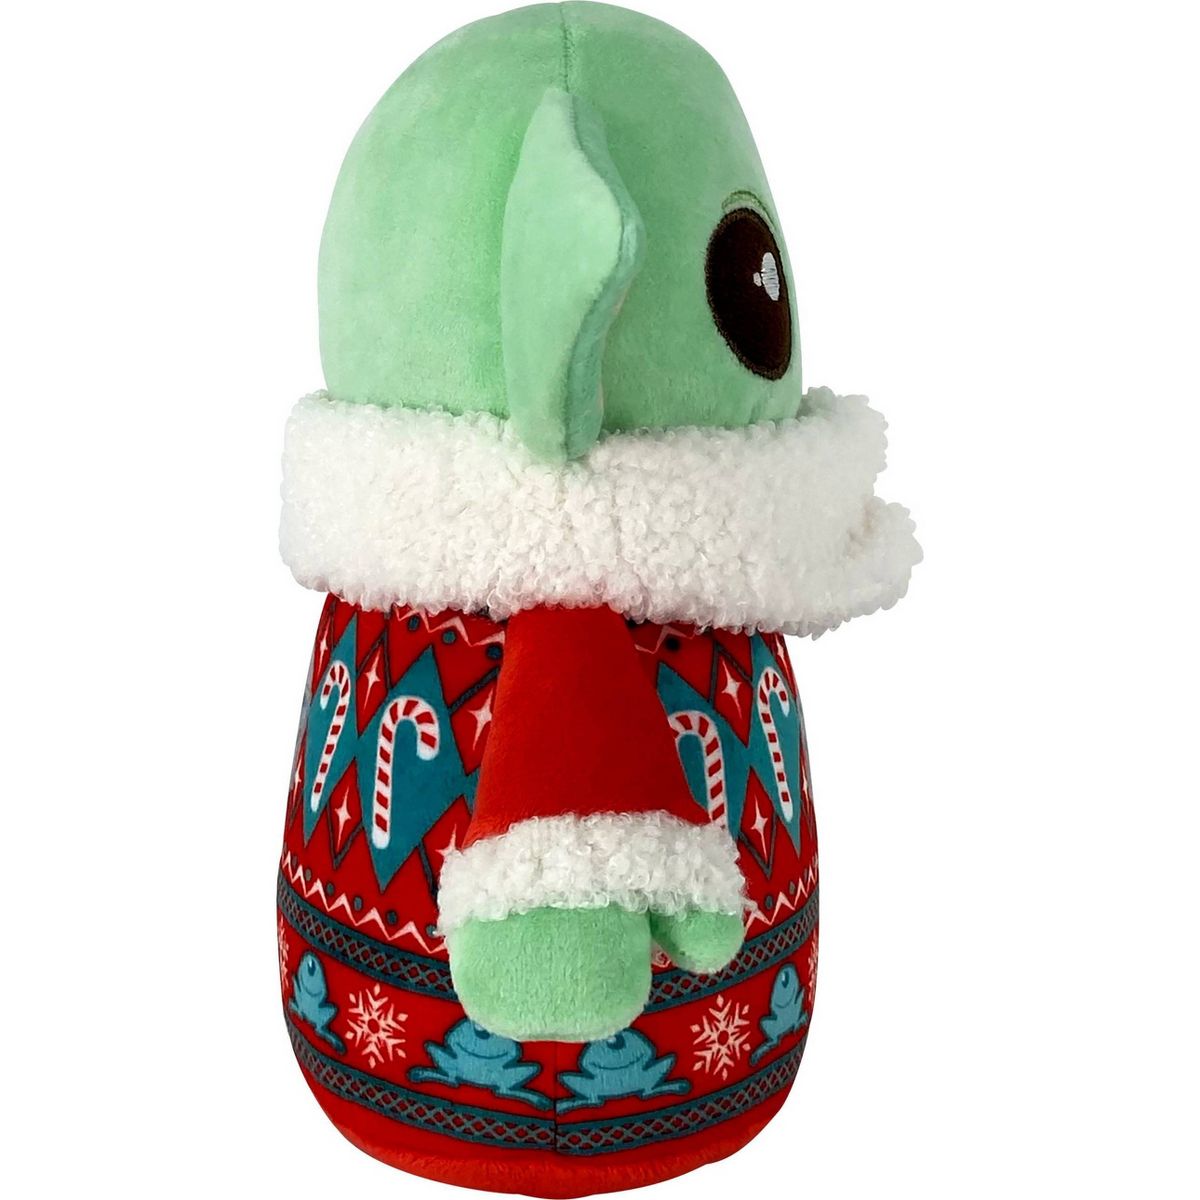 TM The Child (Grogu) Holiday Plush Toy 2